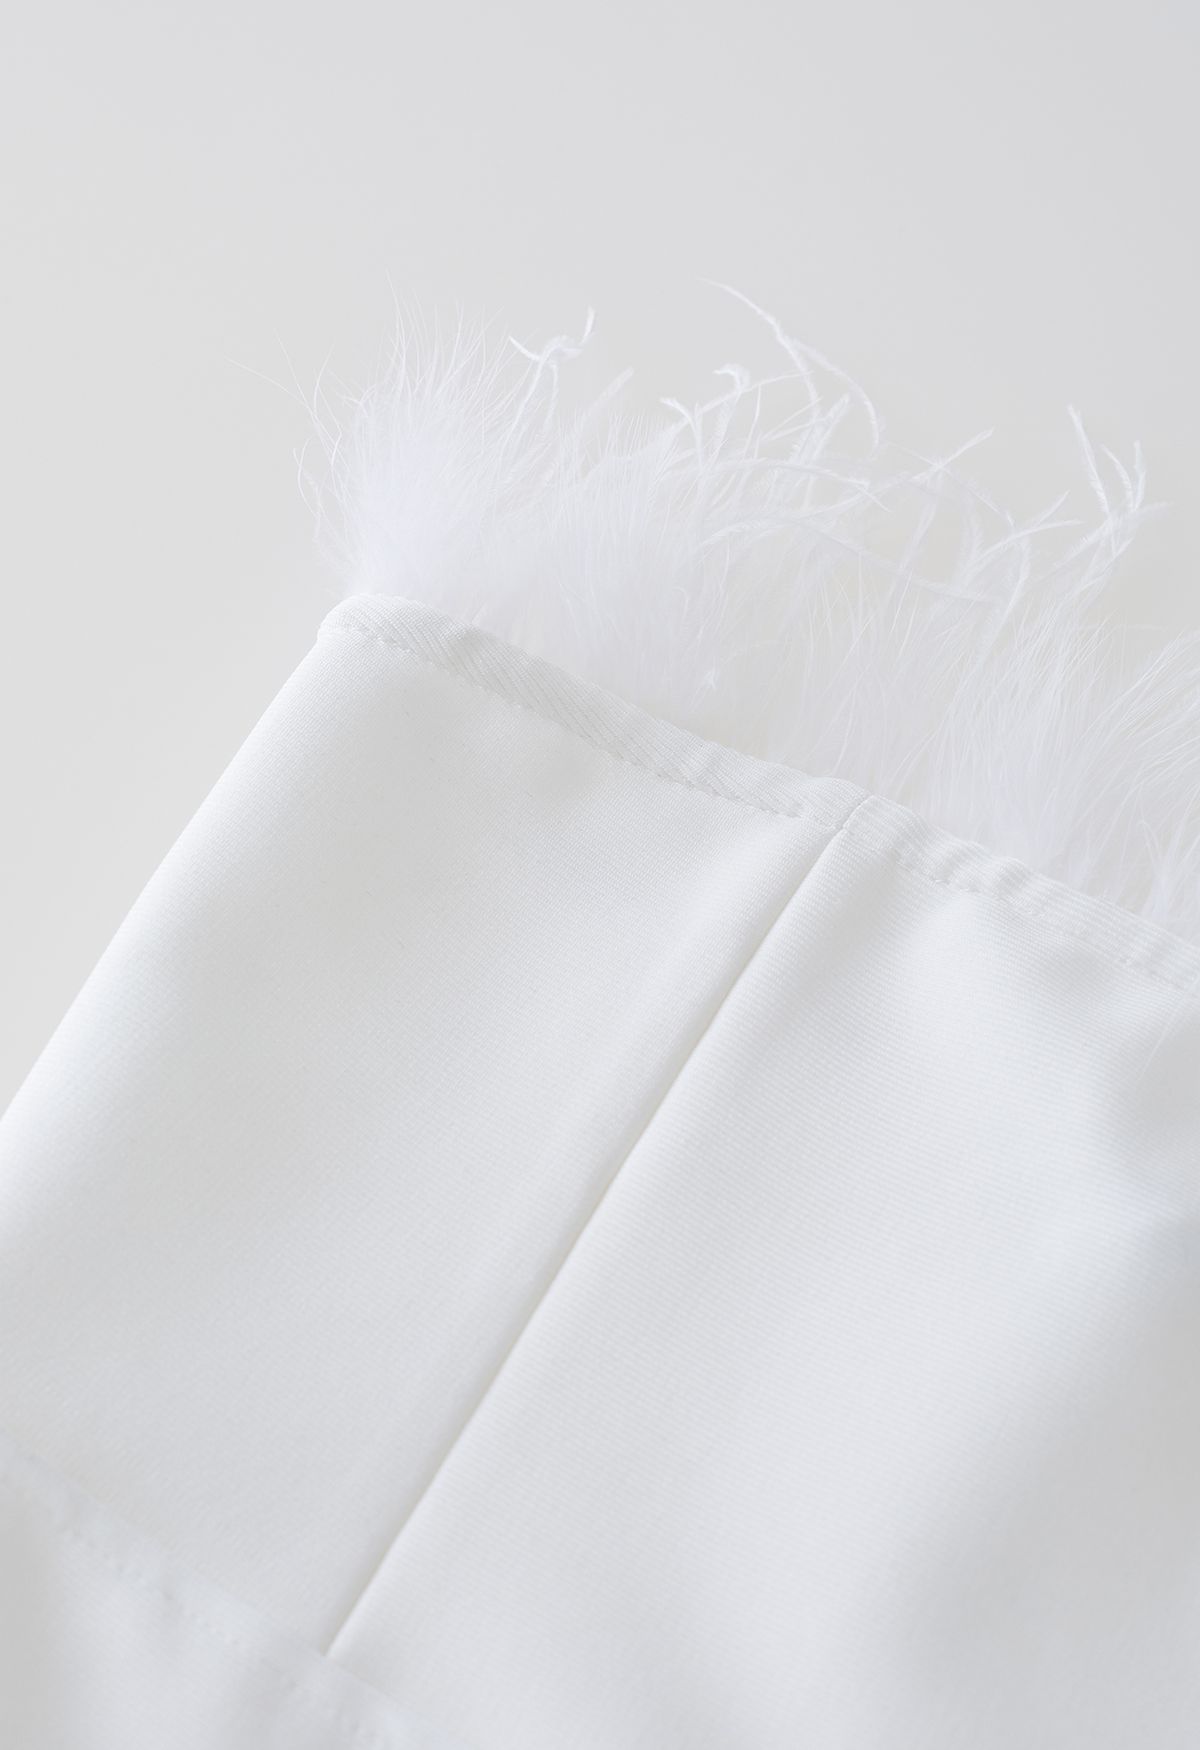 Feather Trim Bodycon Tube Cocktail Dress in White